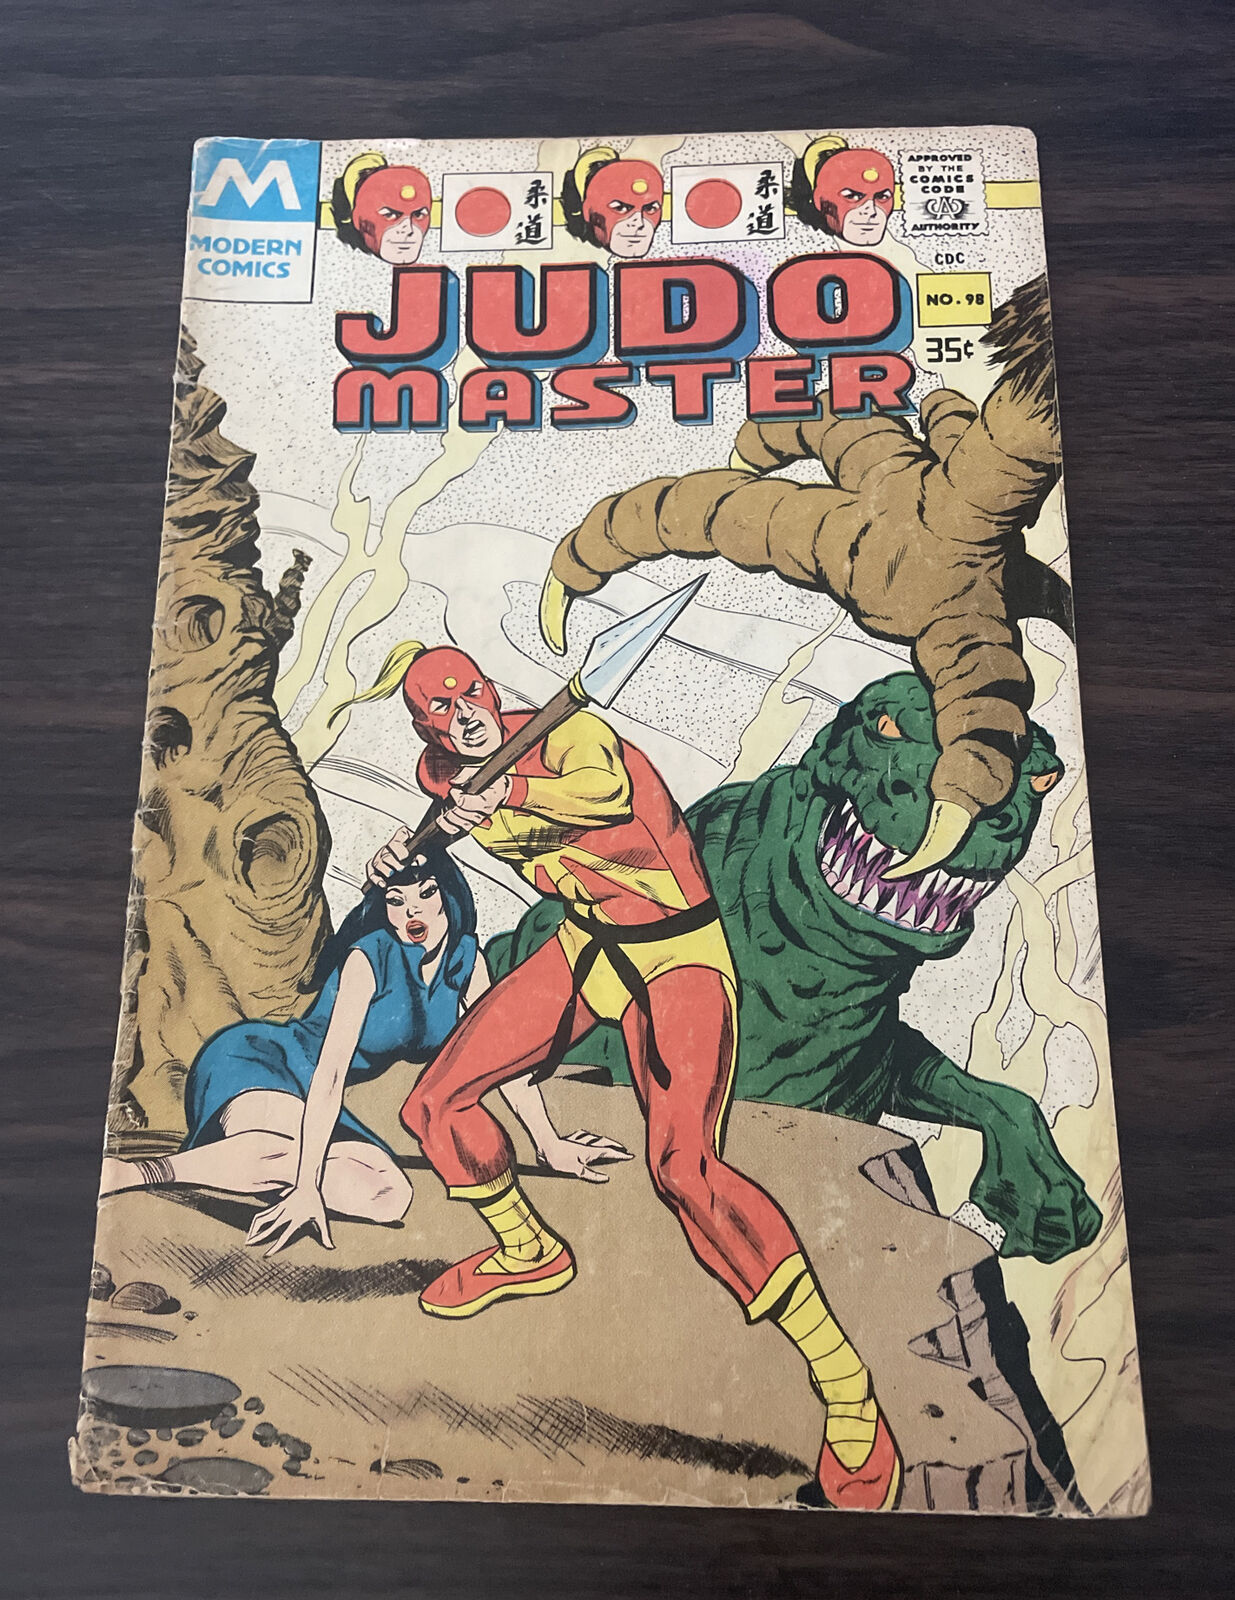 Modern Comics Judo Master No. 98 Very Used Read Desc.